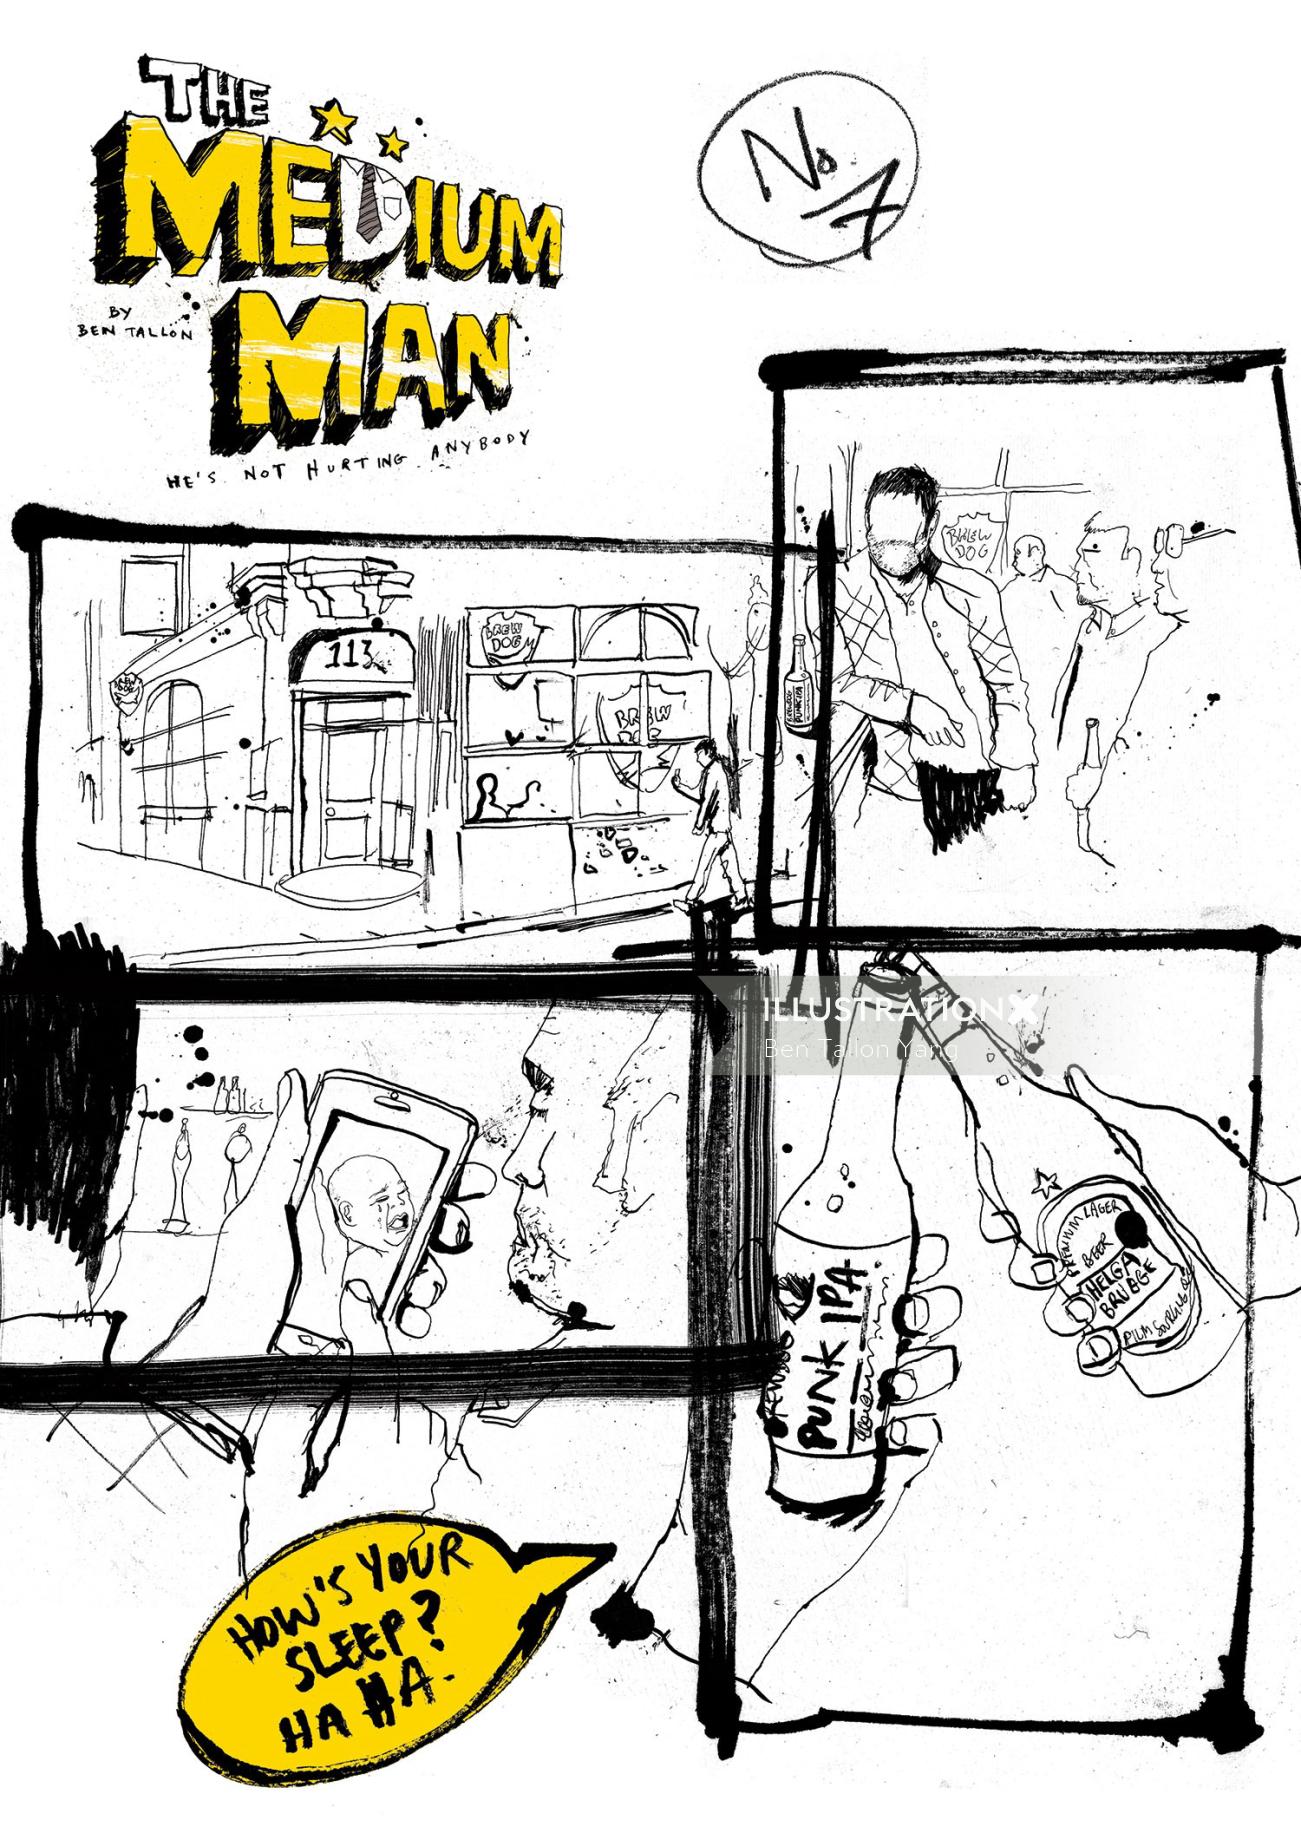 Artwork for the novel "The Medium Man" in the comic book genre